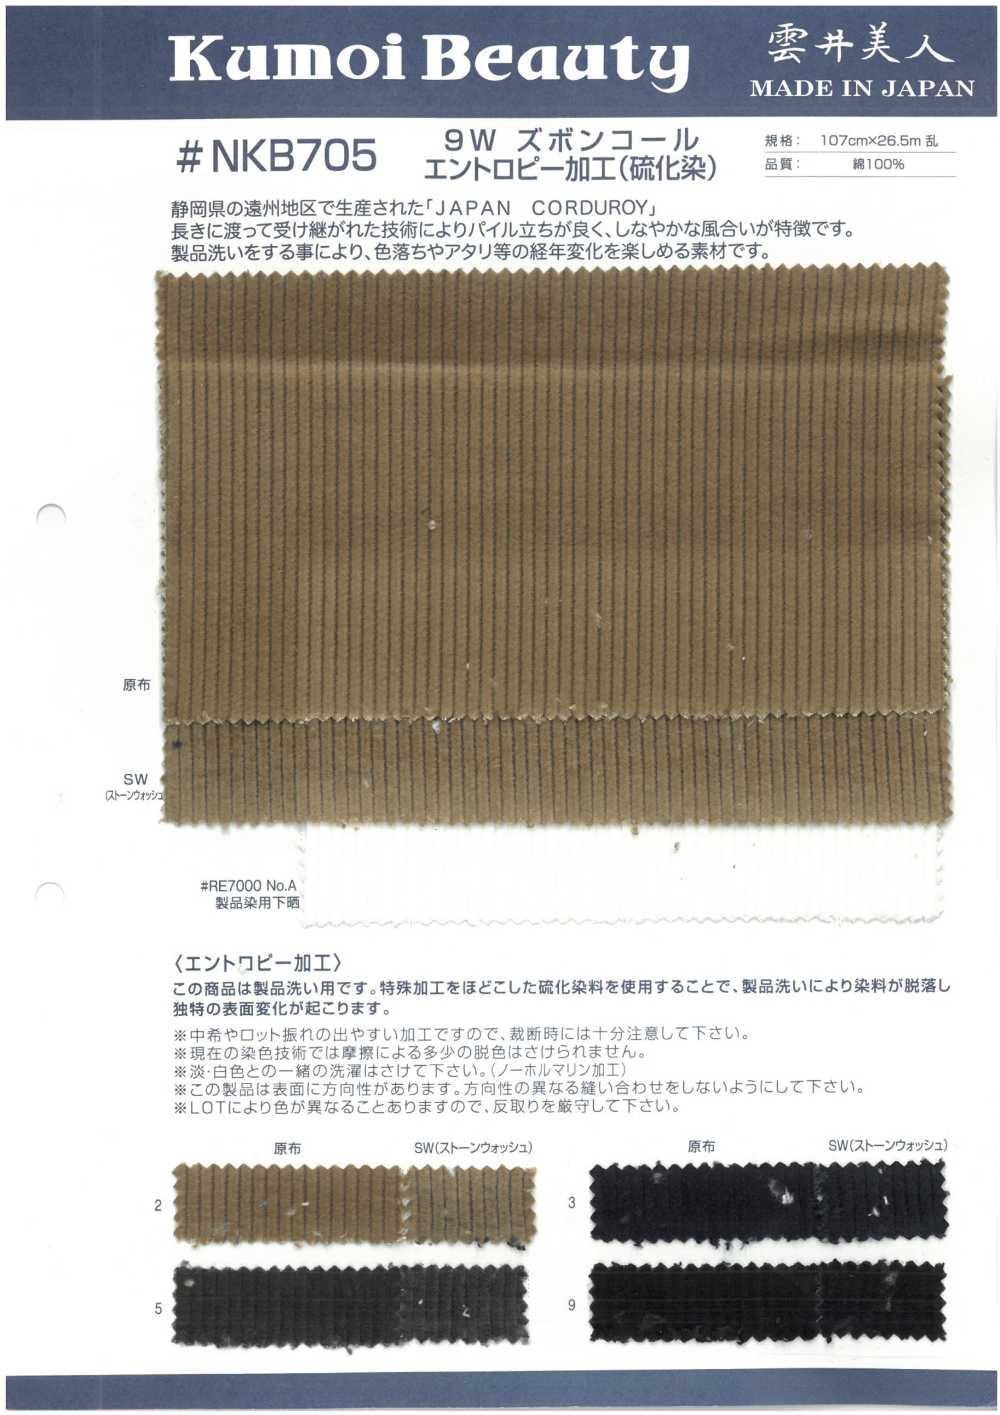 NKB705 9W-Hose Cord-Entropieverarbeitung (Sulfidfärbung)[Textilgewebe] Kumoi Beauty (Chubu Velveteen Cord)